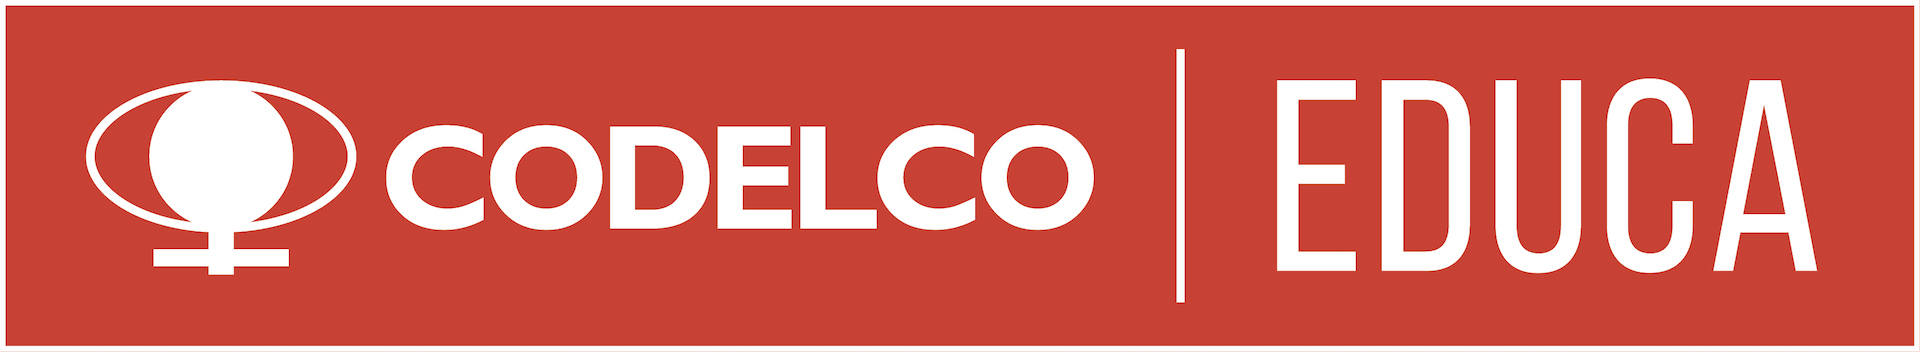 Logo Codelco Educa